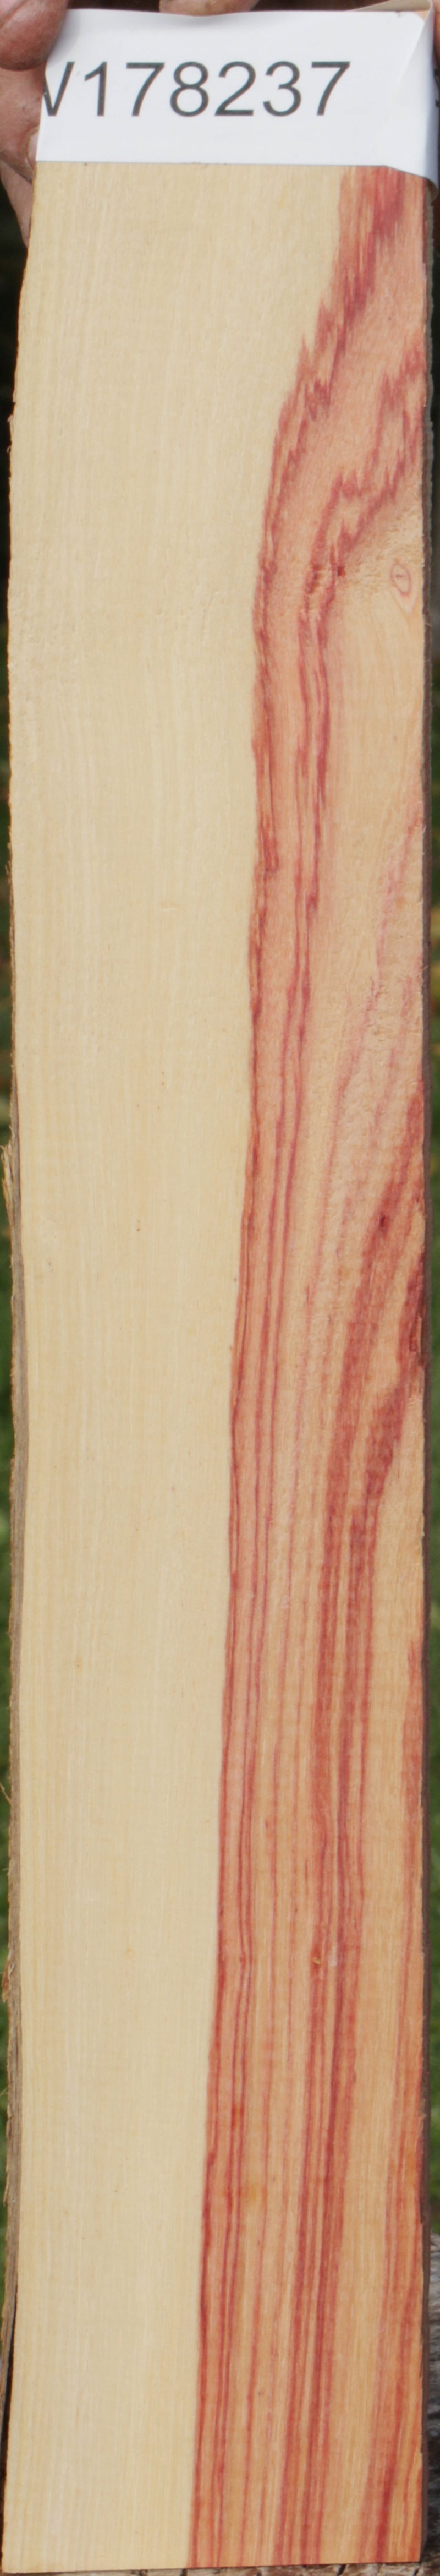 Tulipwood Micro Lumber